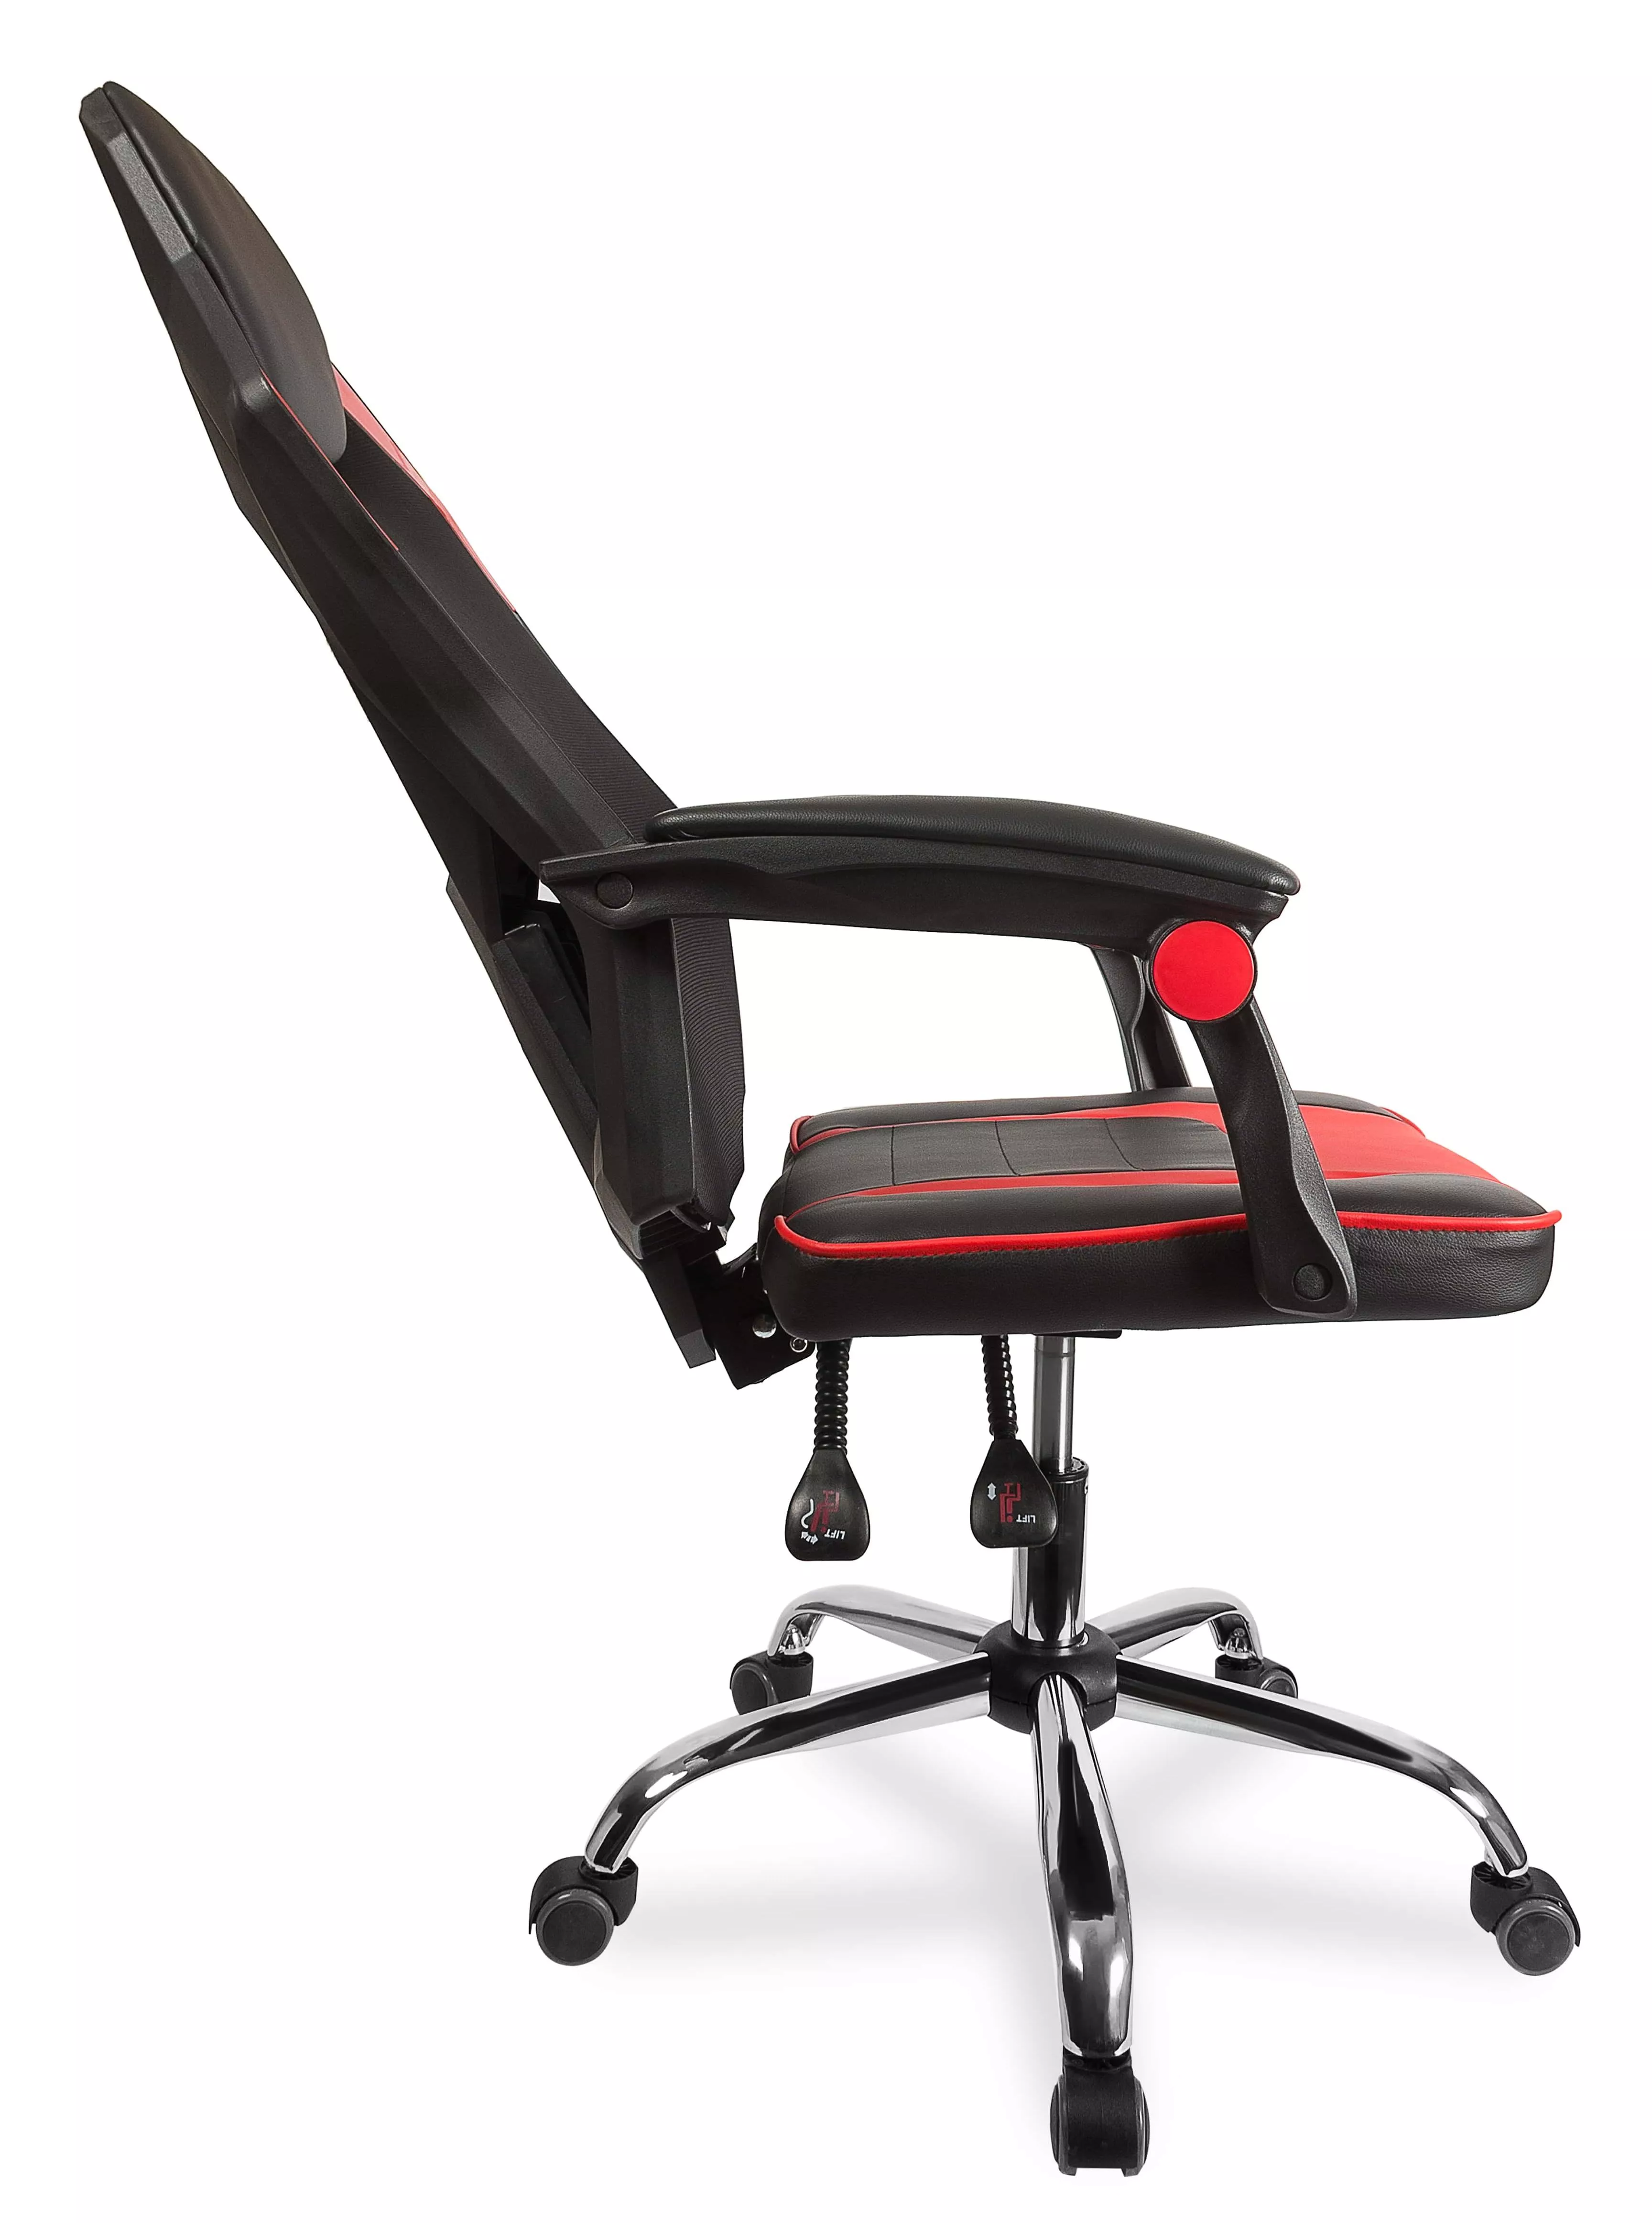 Геймерское кресло College CLG-802 LXH Red